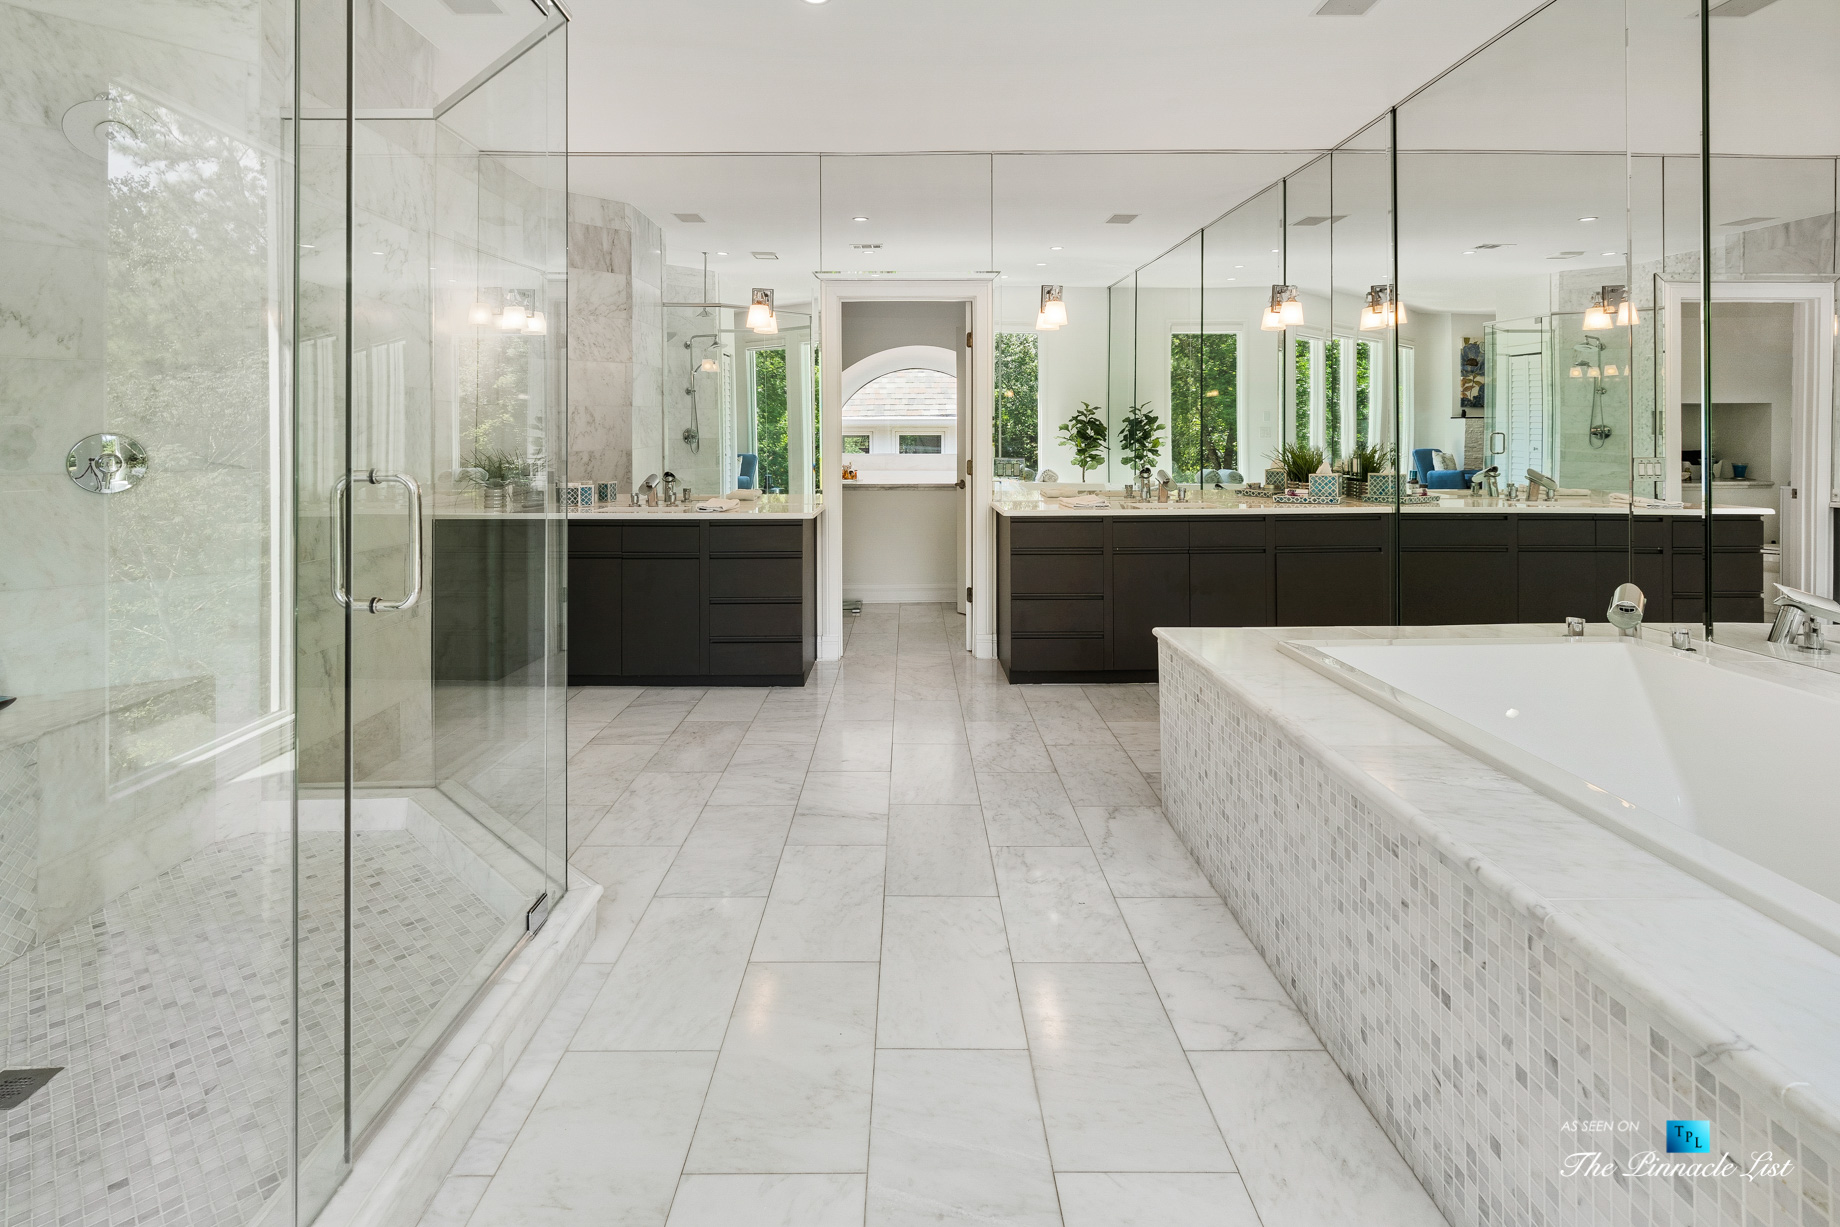 3906 Paces Ferry Rd NW, Atlanta, GA, USA - Master Bathroom Glass Wall Shower - Luxury Real Estate - Buckhead Home